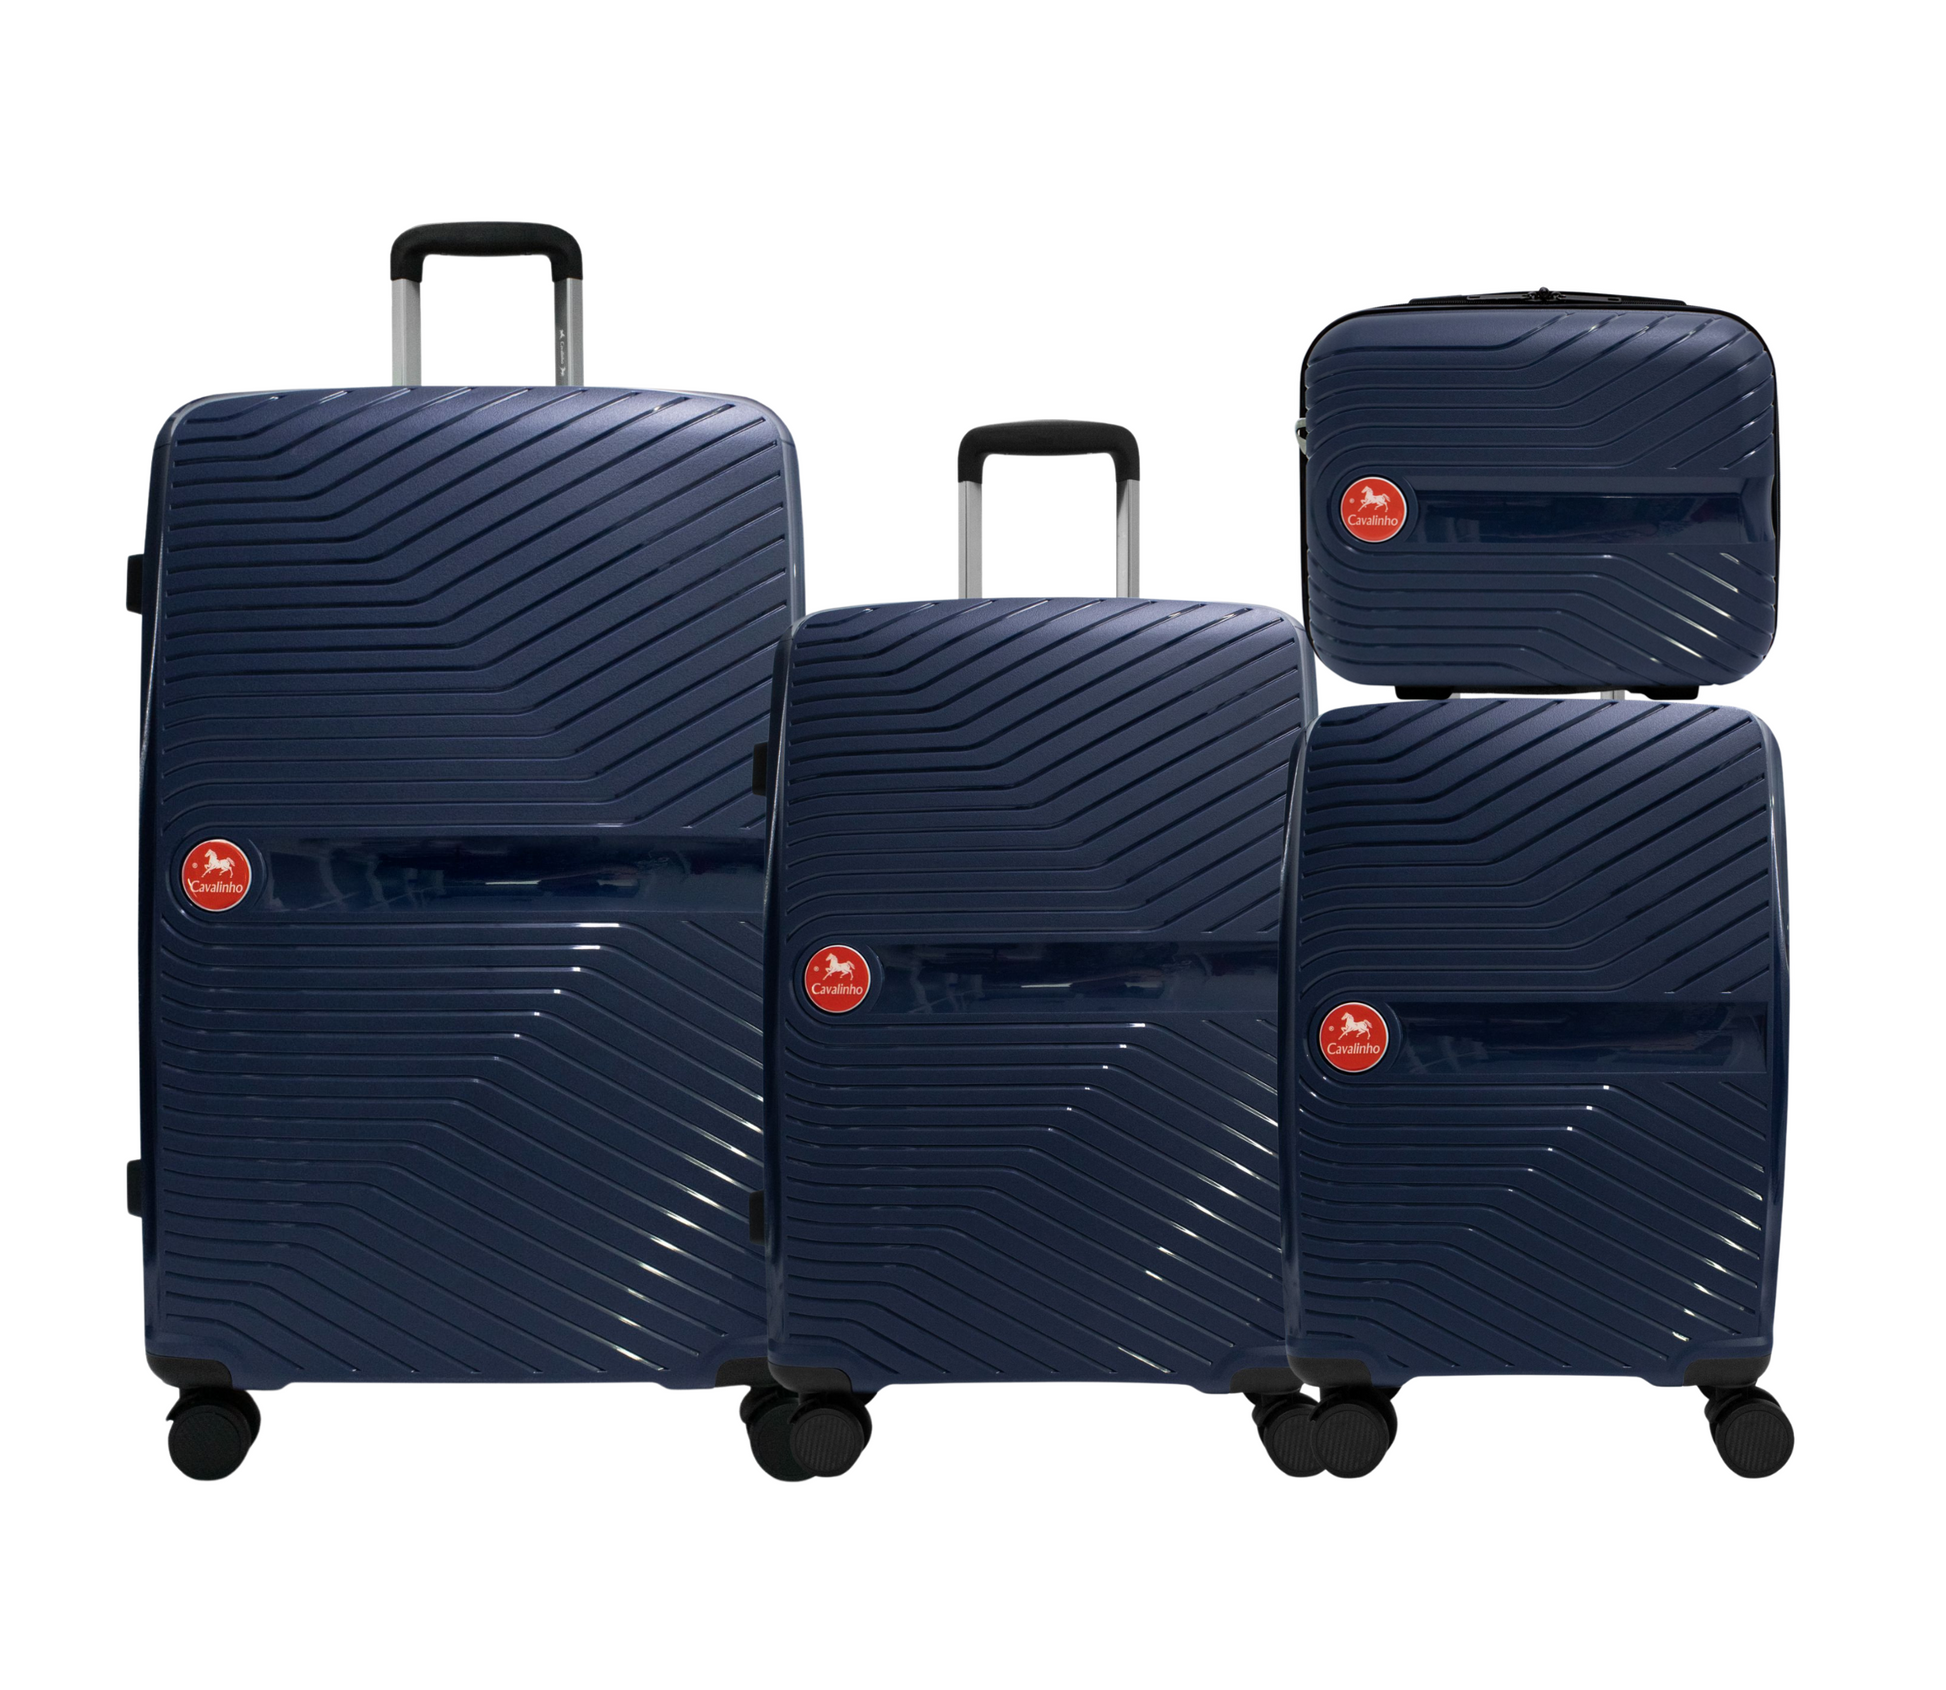 Cavalinho Canada & USA 4 Piece Set of Colorful Hardside Luggage (15", 19", 24", 28") - Navy - 68020004.03.S4_1